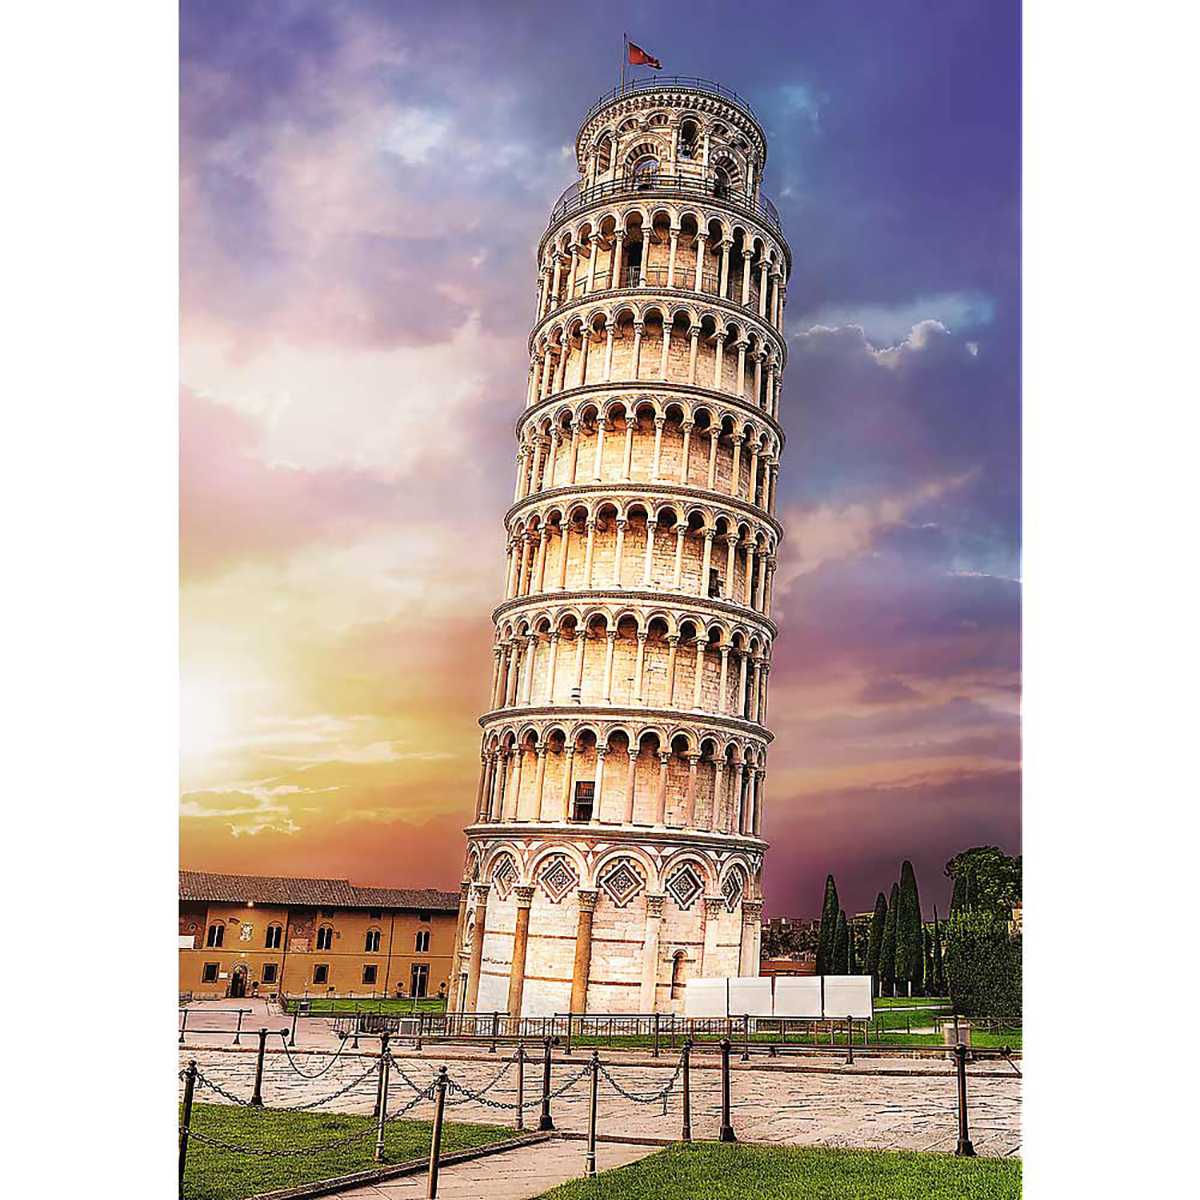 Pisa von Turm Puzzle Schiefer TREFL